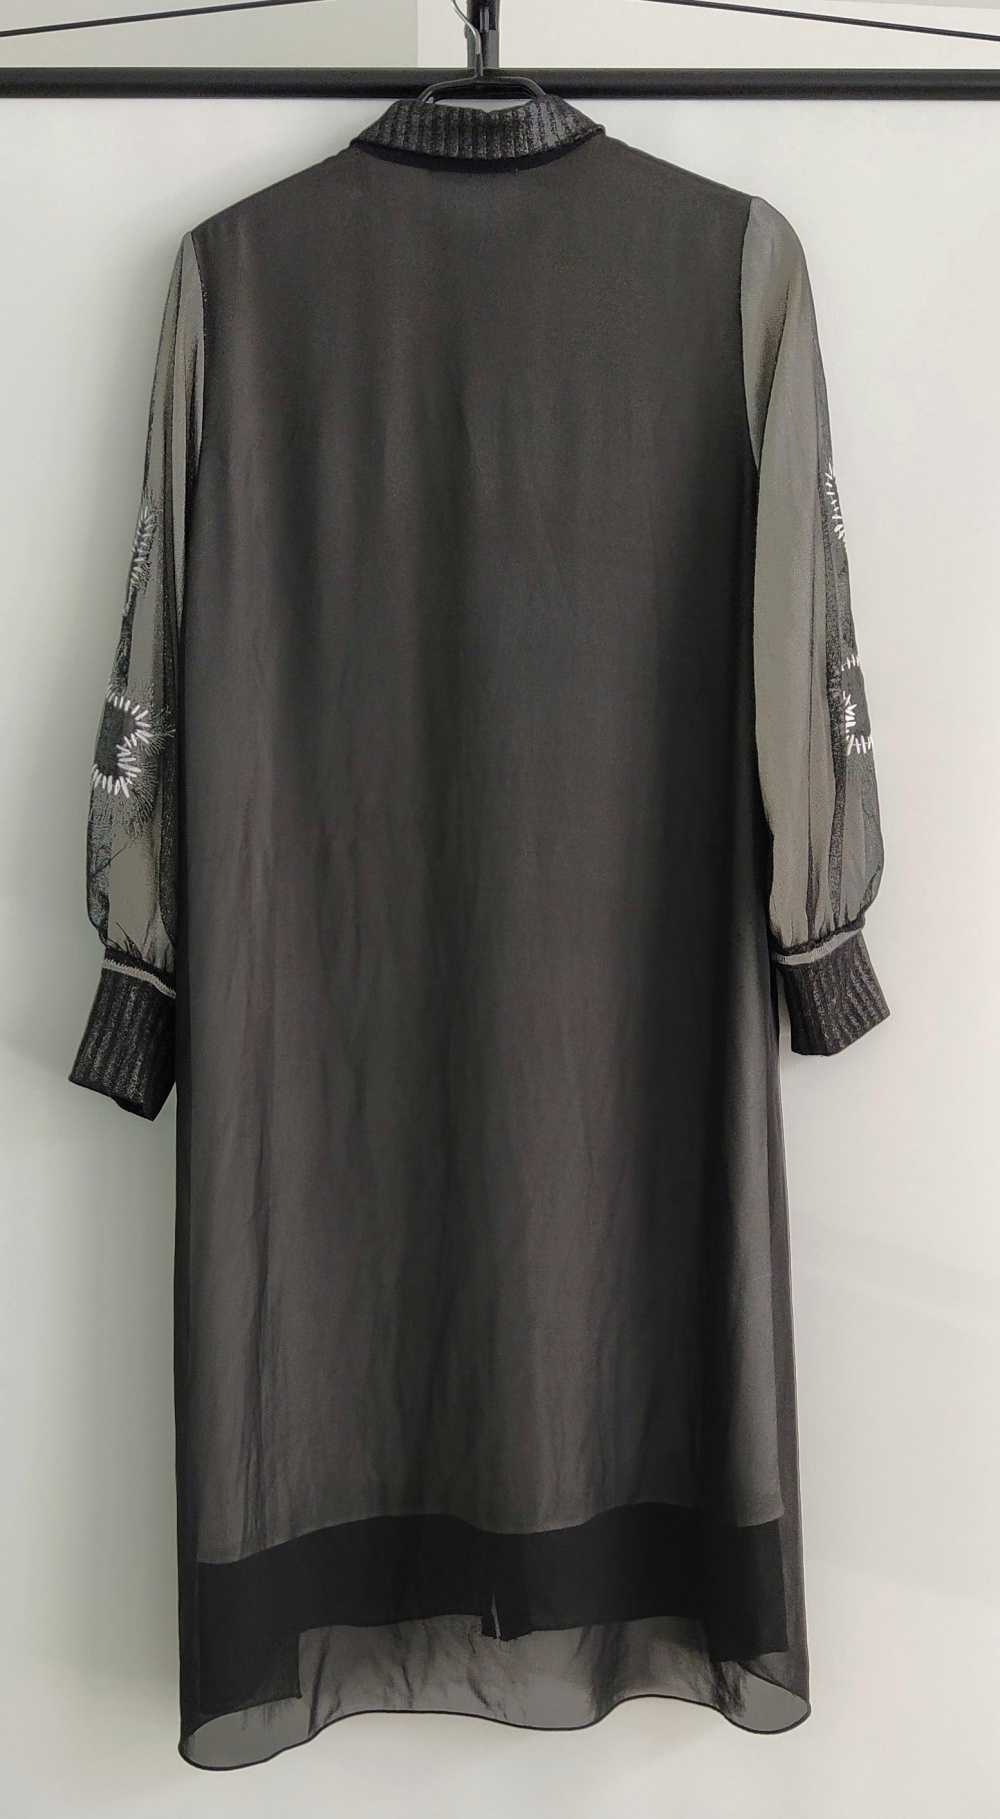 Платье - рубашка Zuhre. L, XL